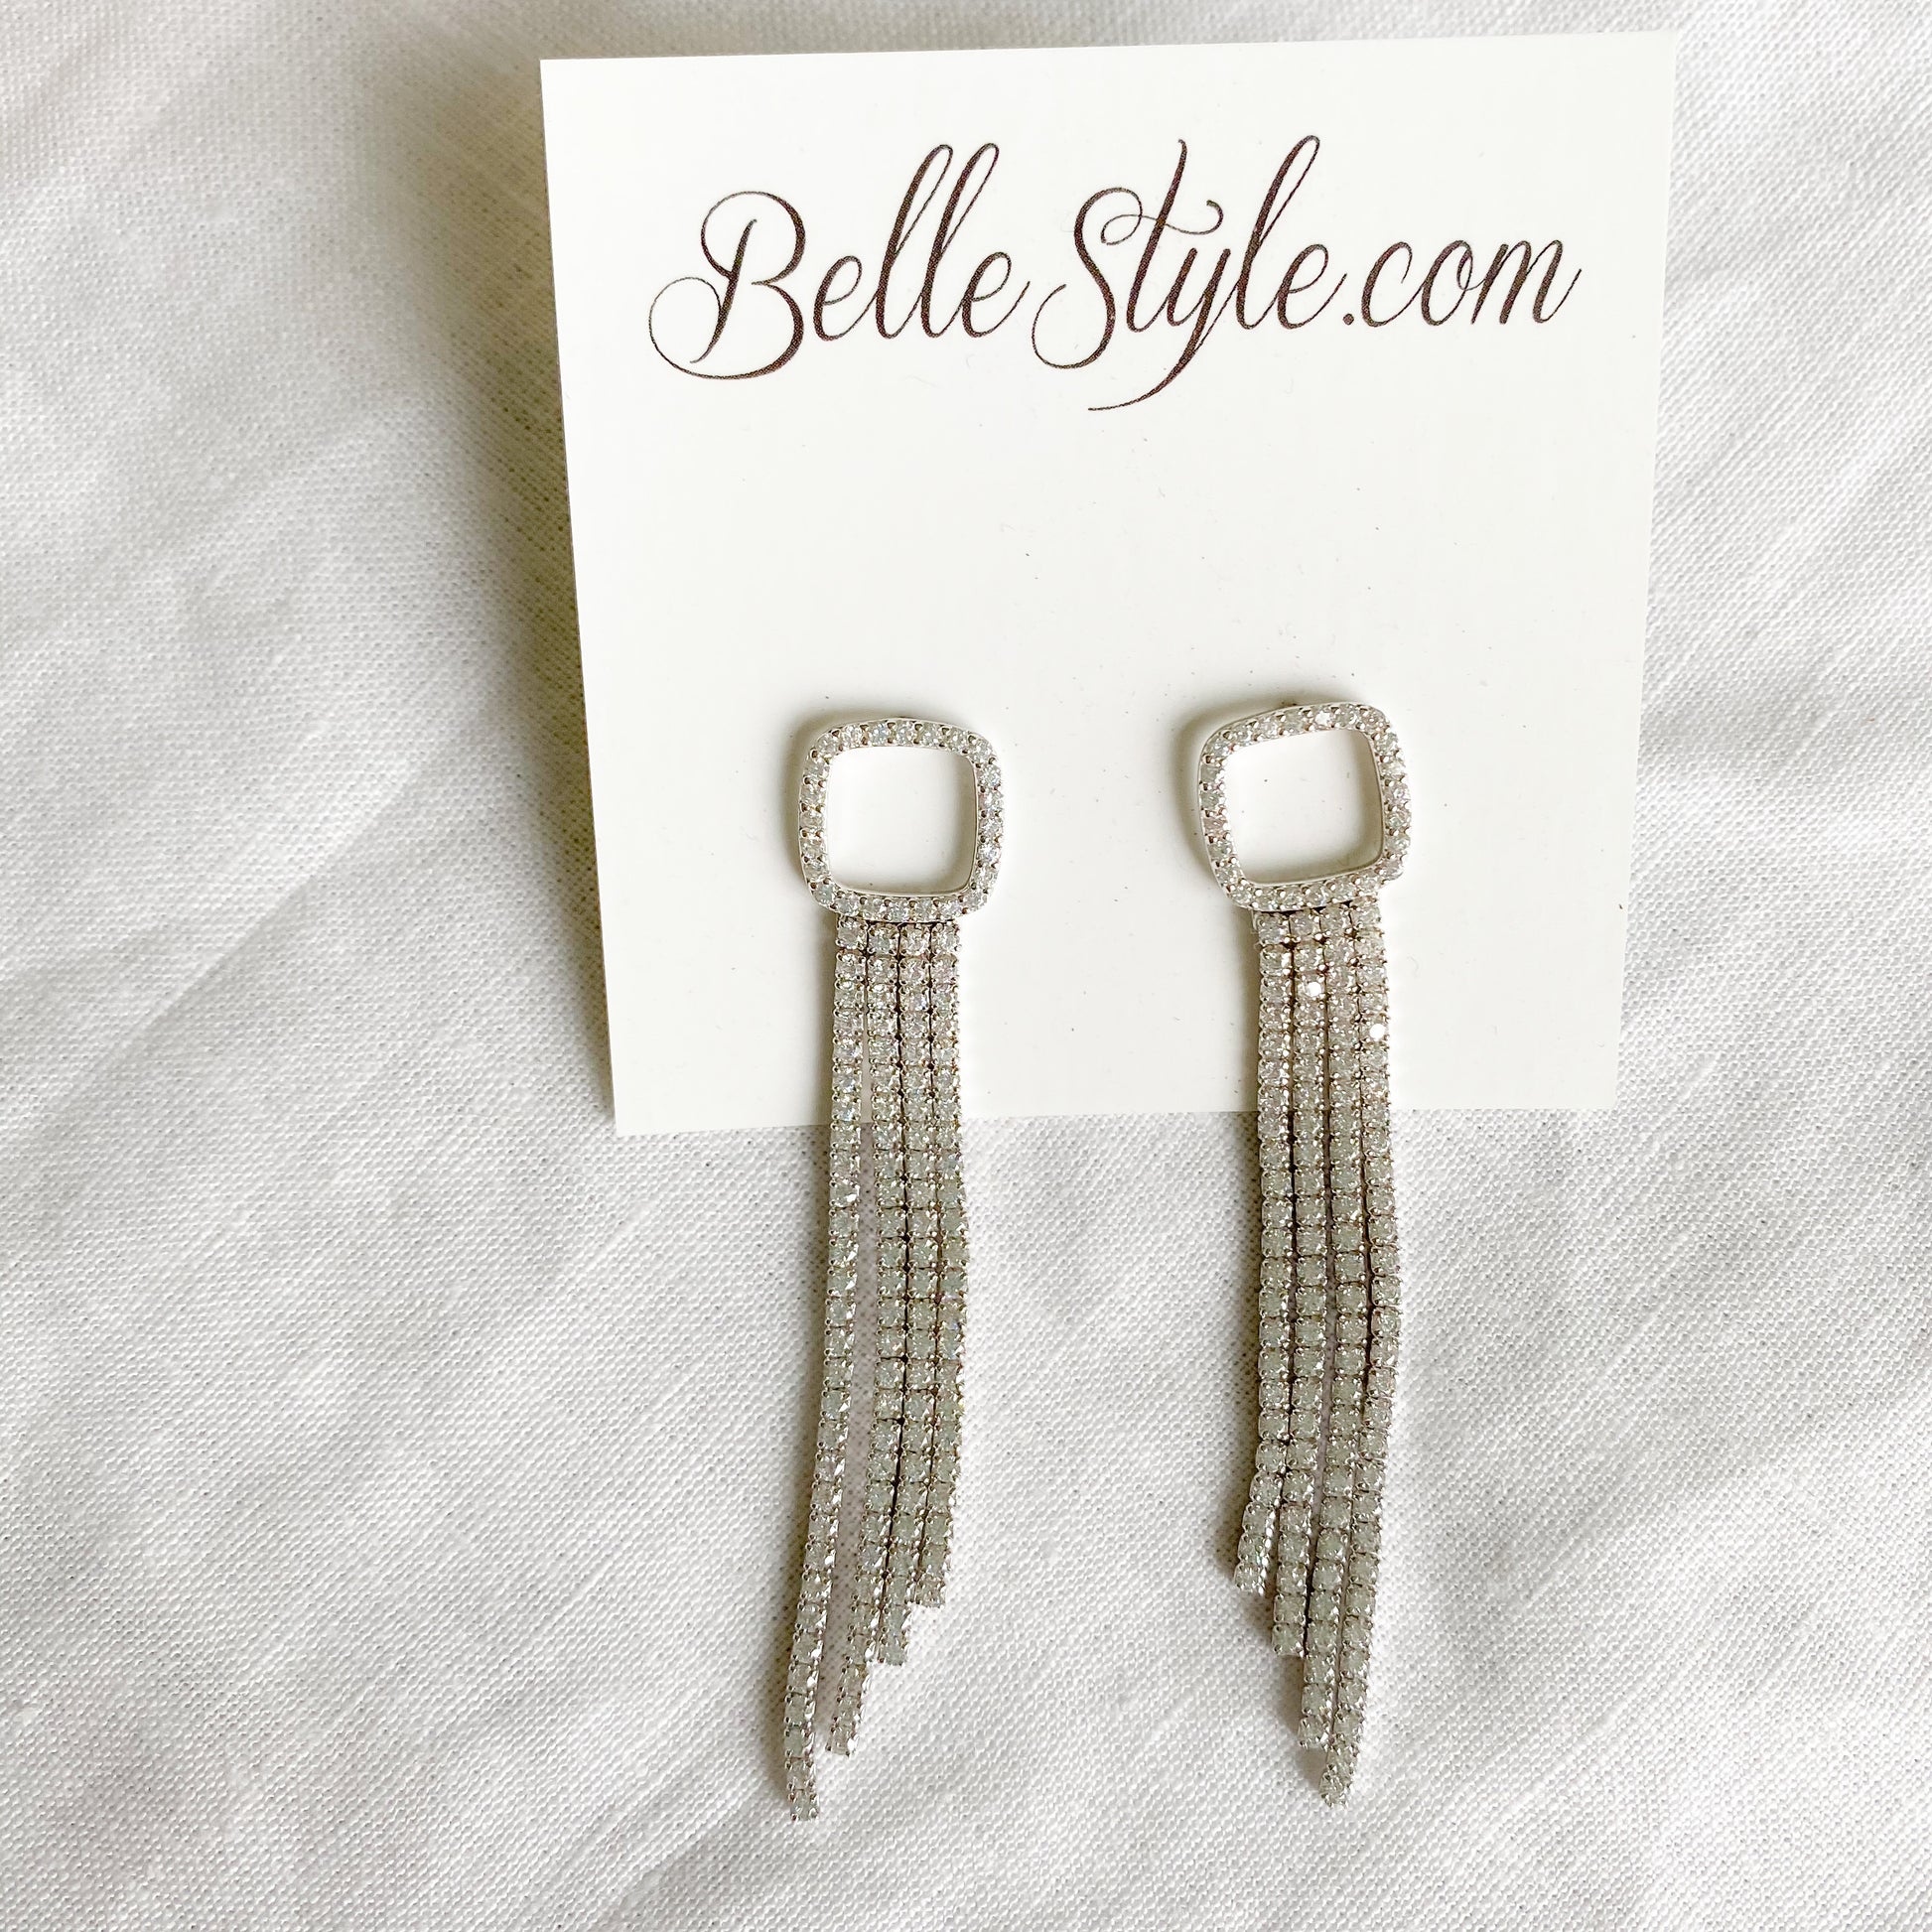 Jellyfish Earrings - BelleStyle